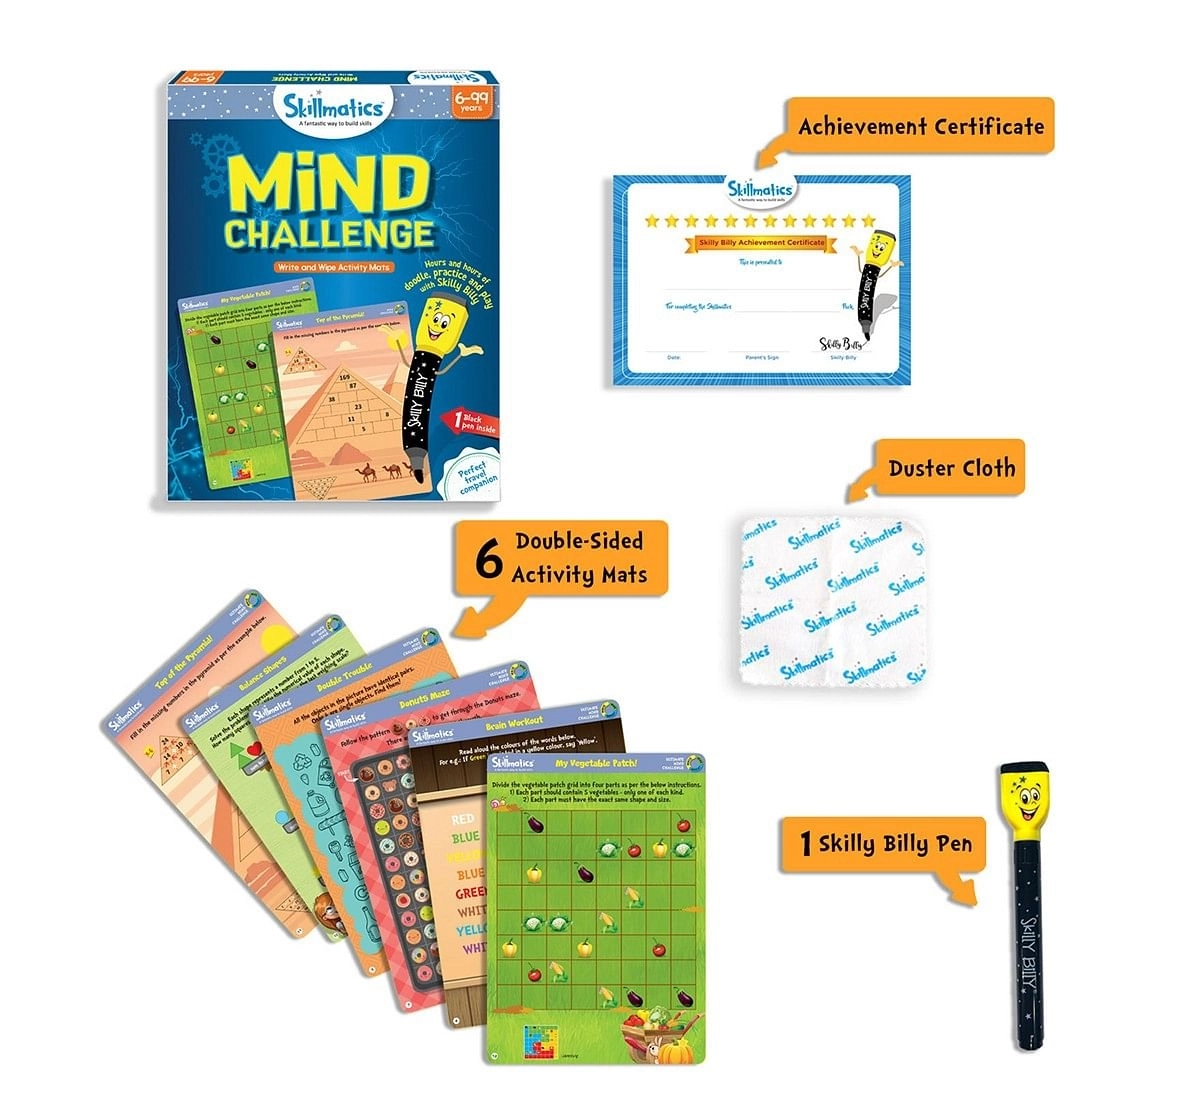  Skillmatics Mind Challenge Games for Kids age 6Y+ 